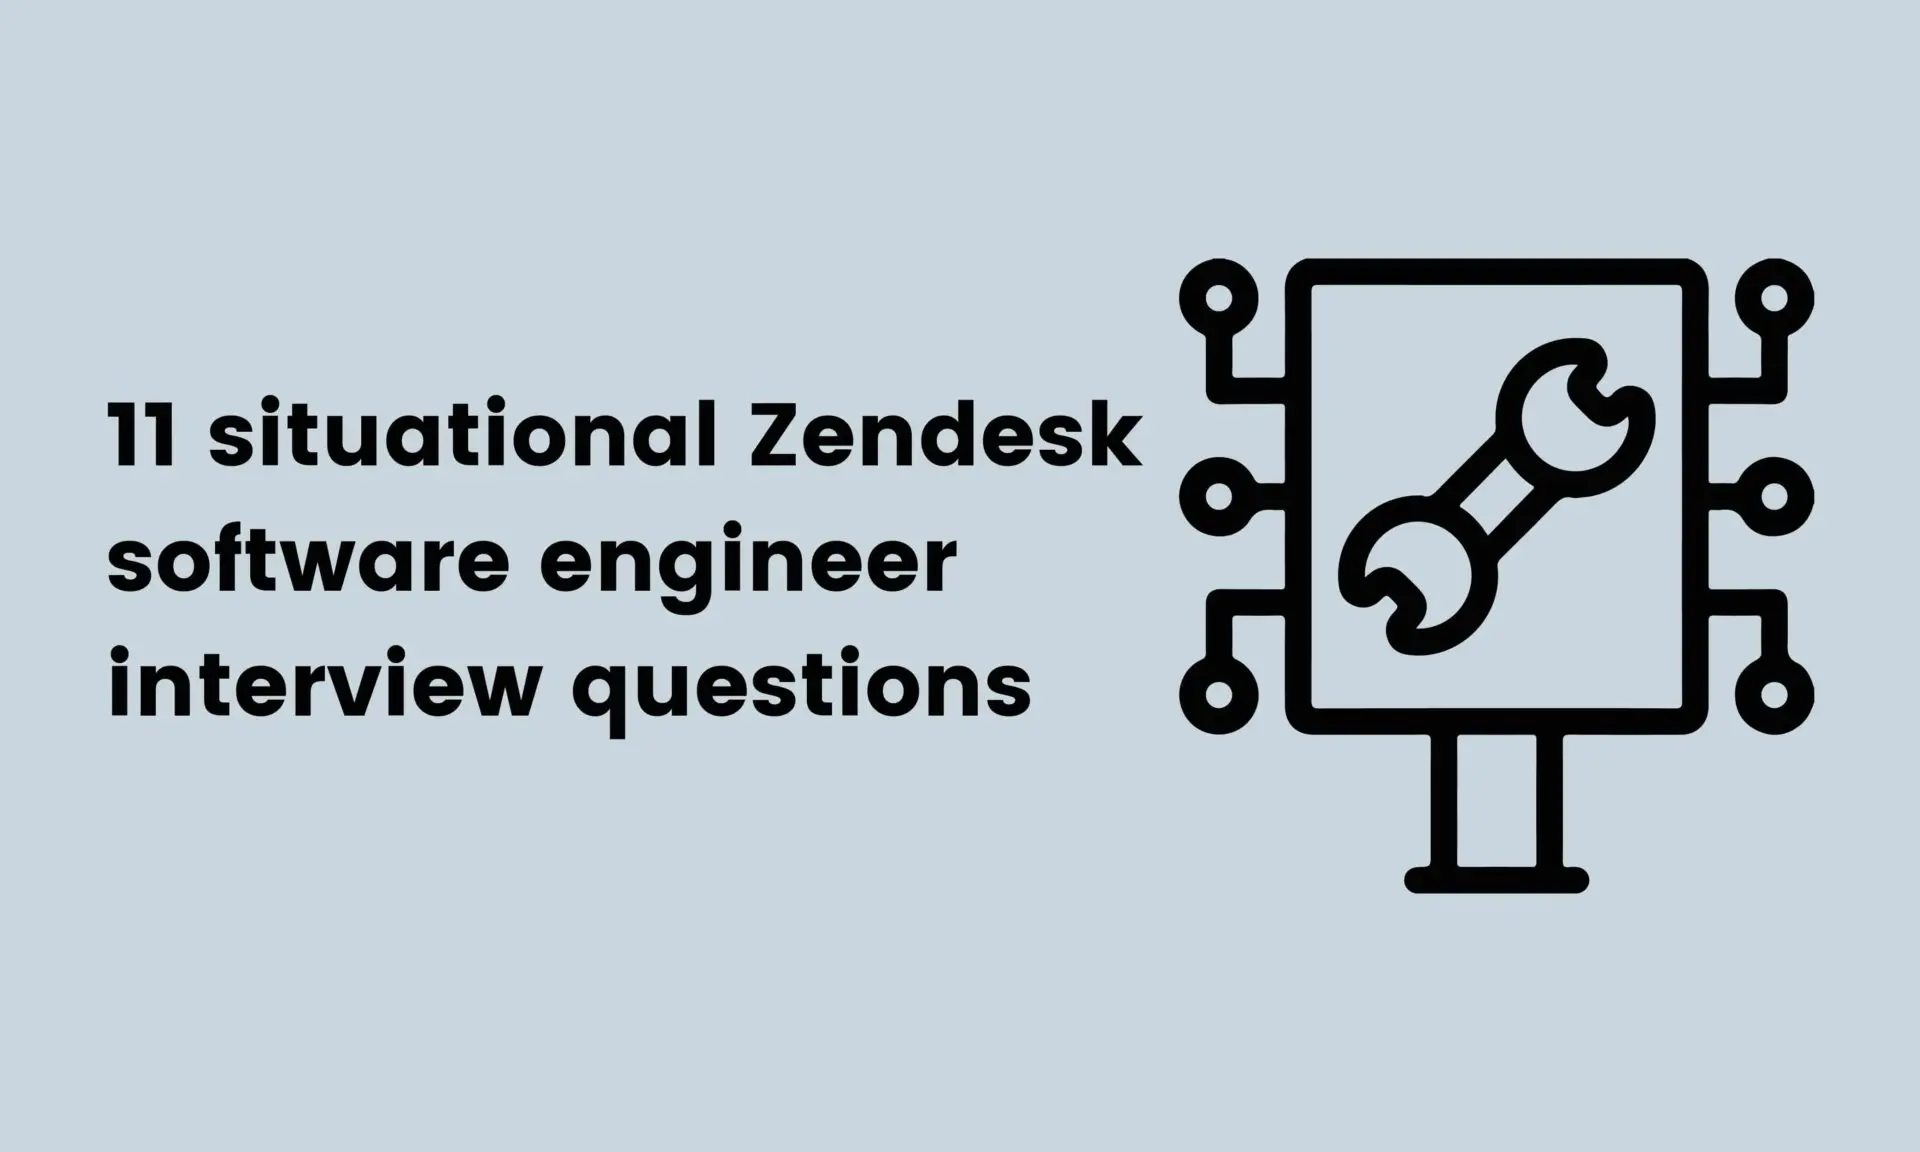 11 situational Zendesk software engineer interview questions